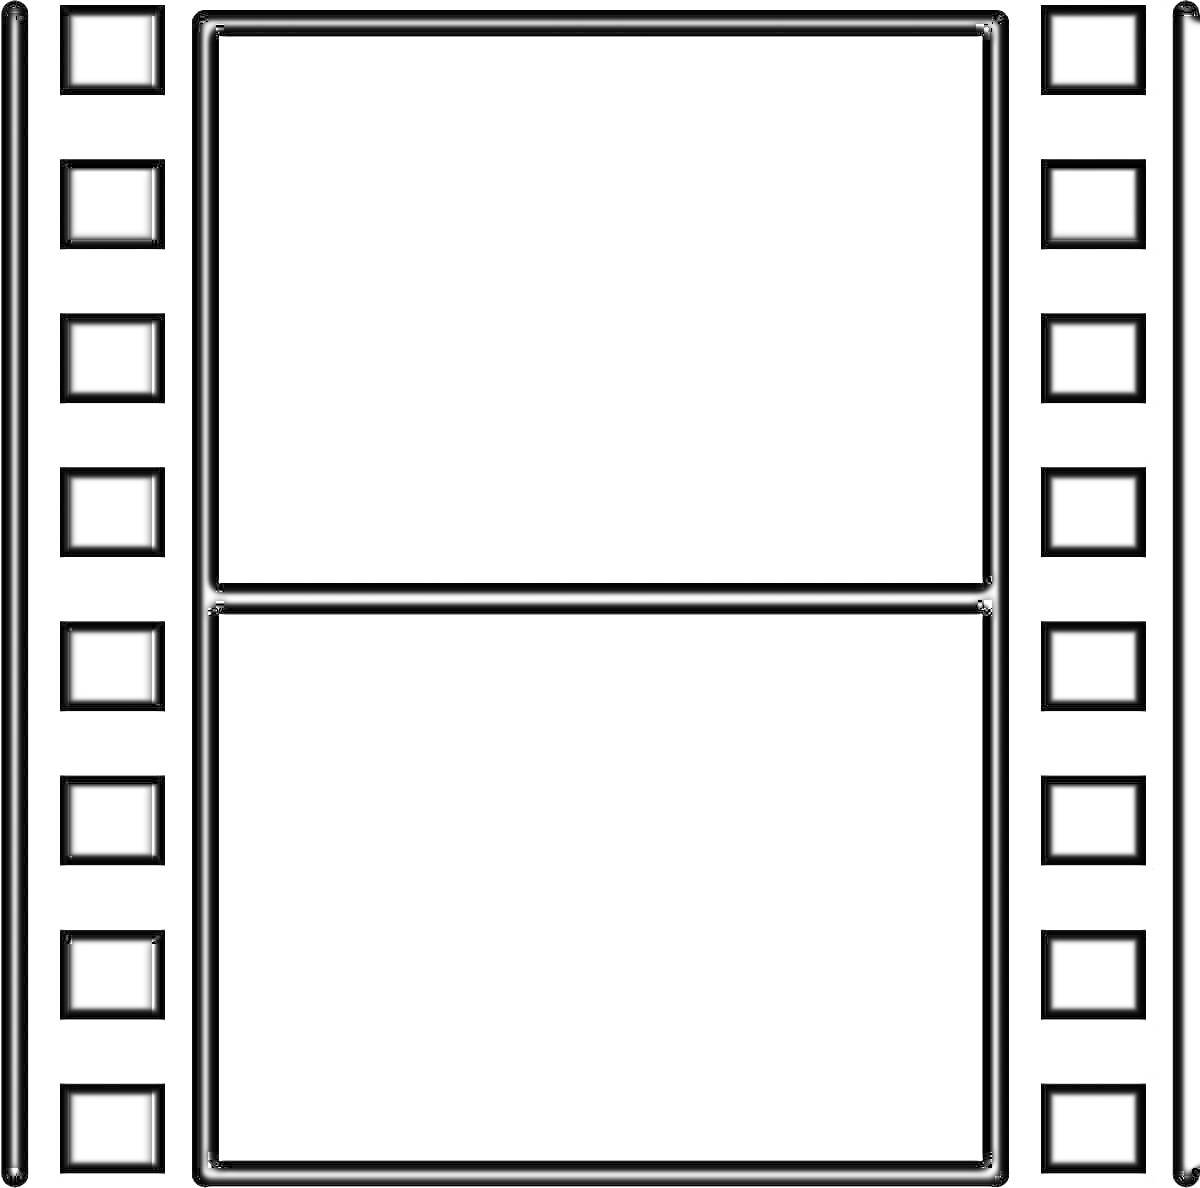 Раскраска кинолента с двумя кадрами и перфорацией по краям